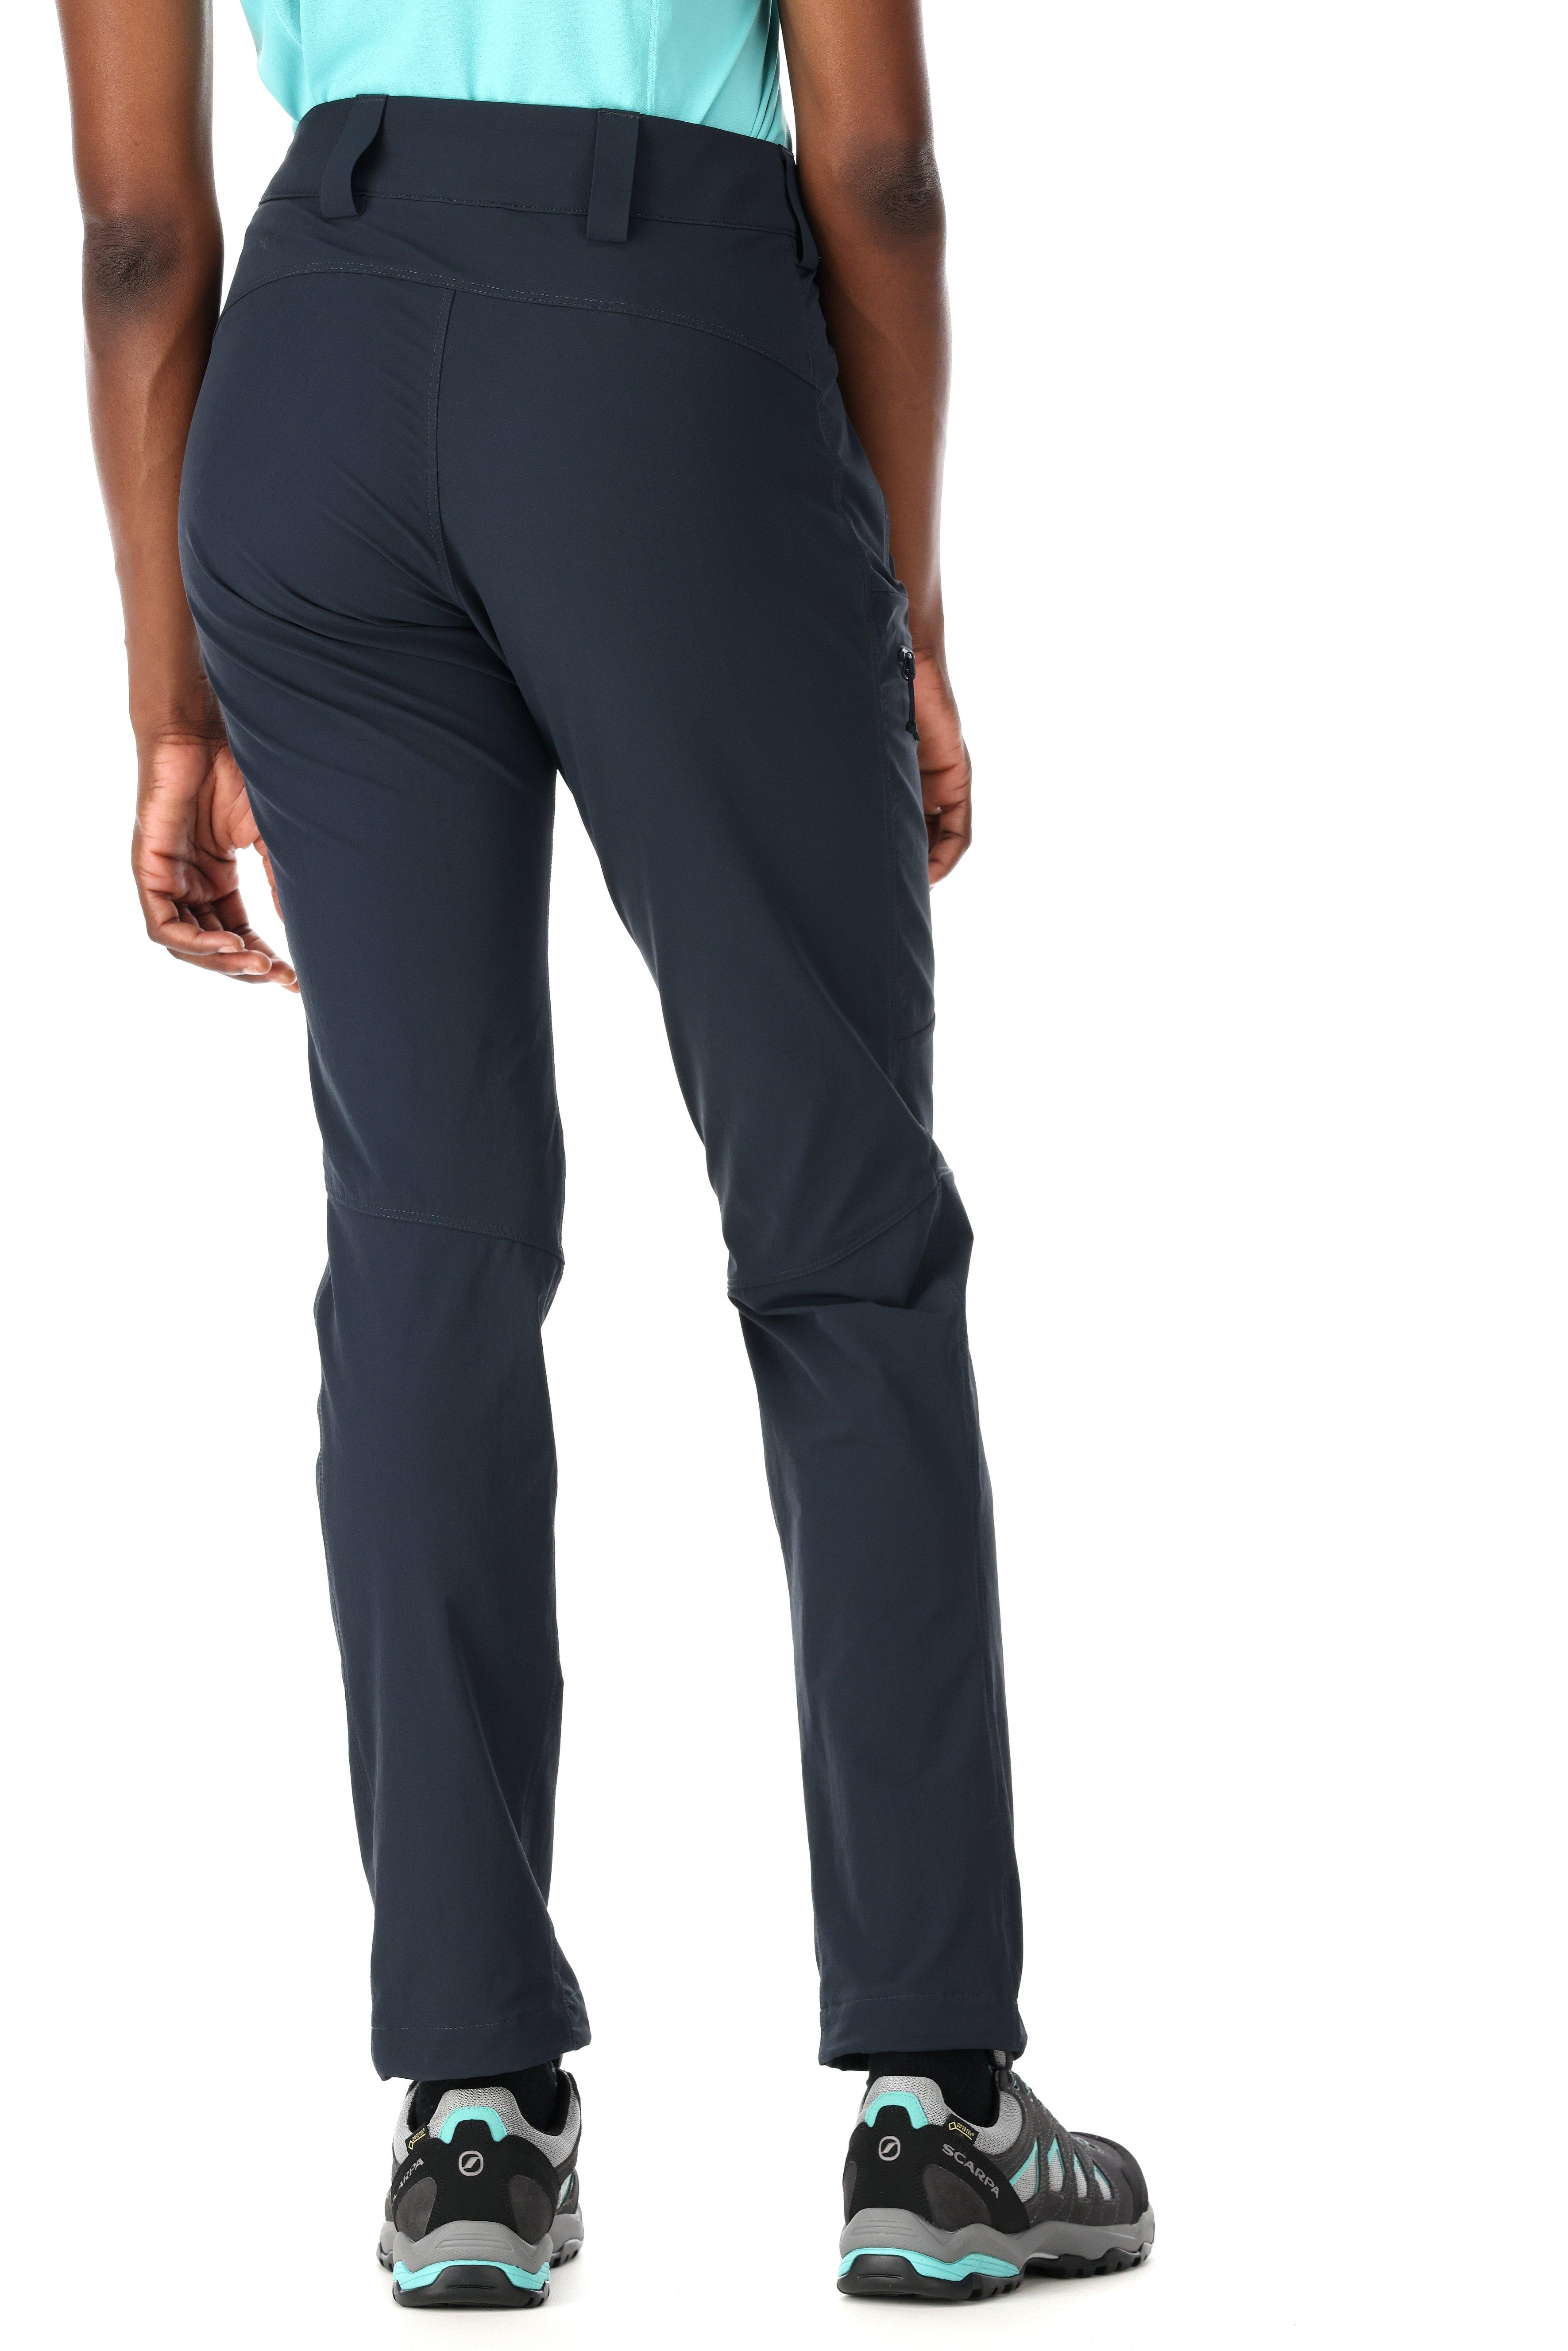 Women's Rab Incline Pants (Short) Walking Trousers George Fisher UK